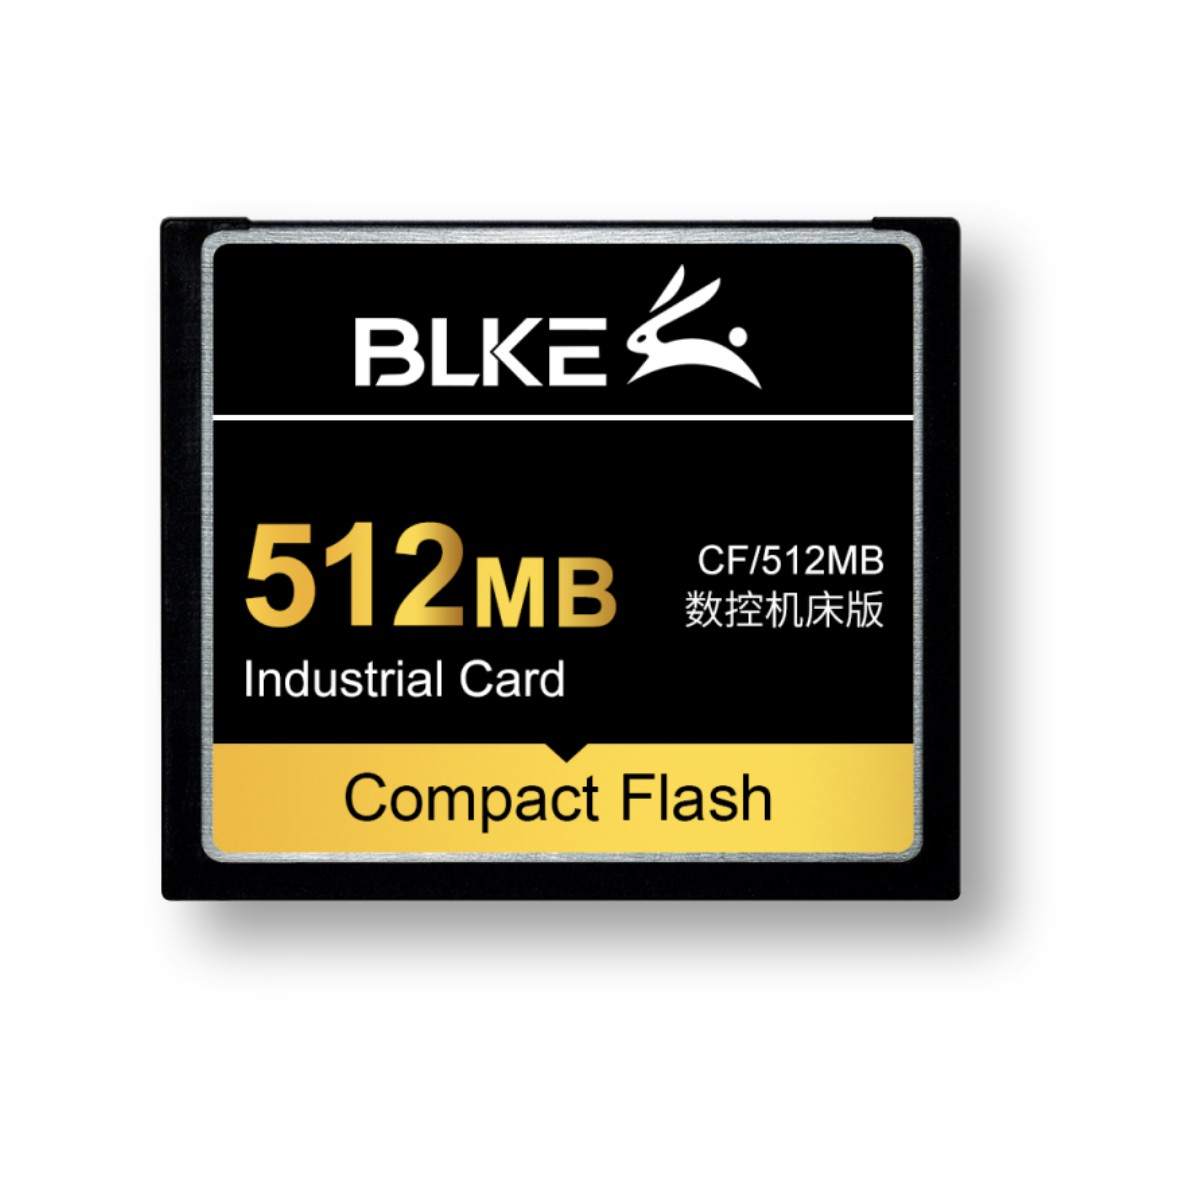 Cartão CF BLKE 512MB Industrial